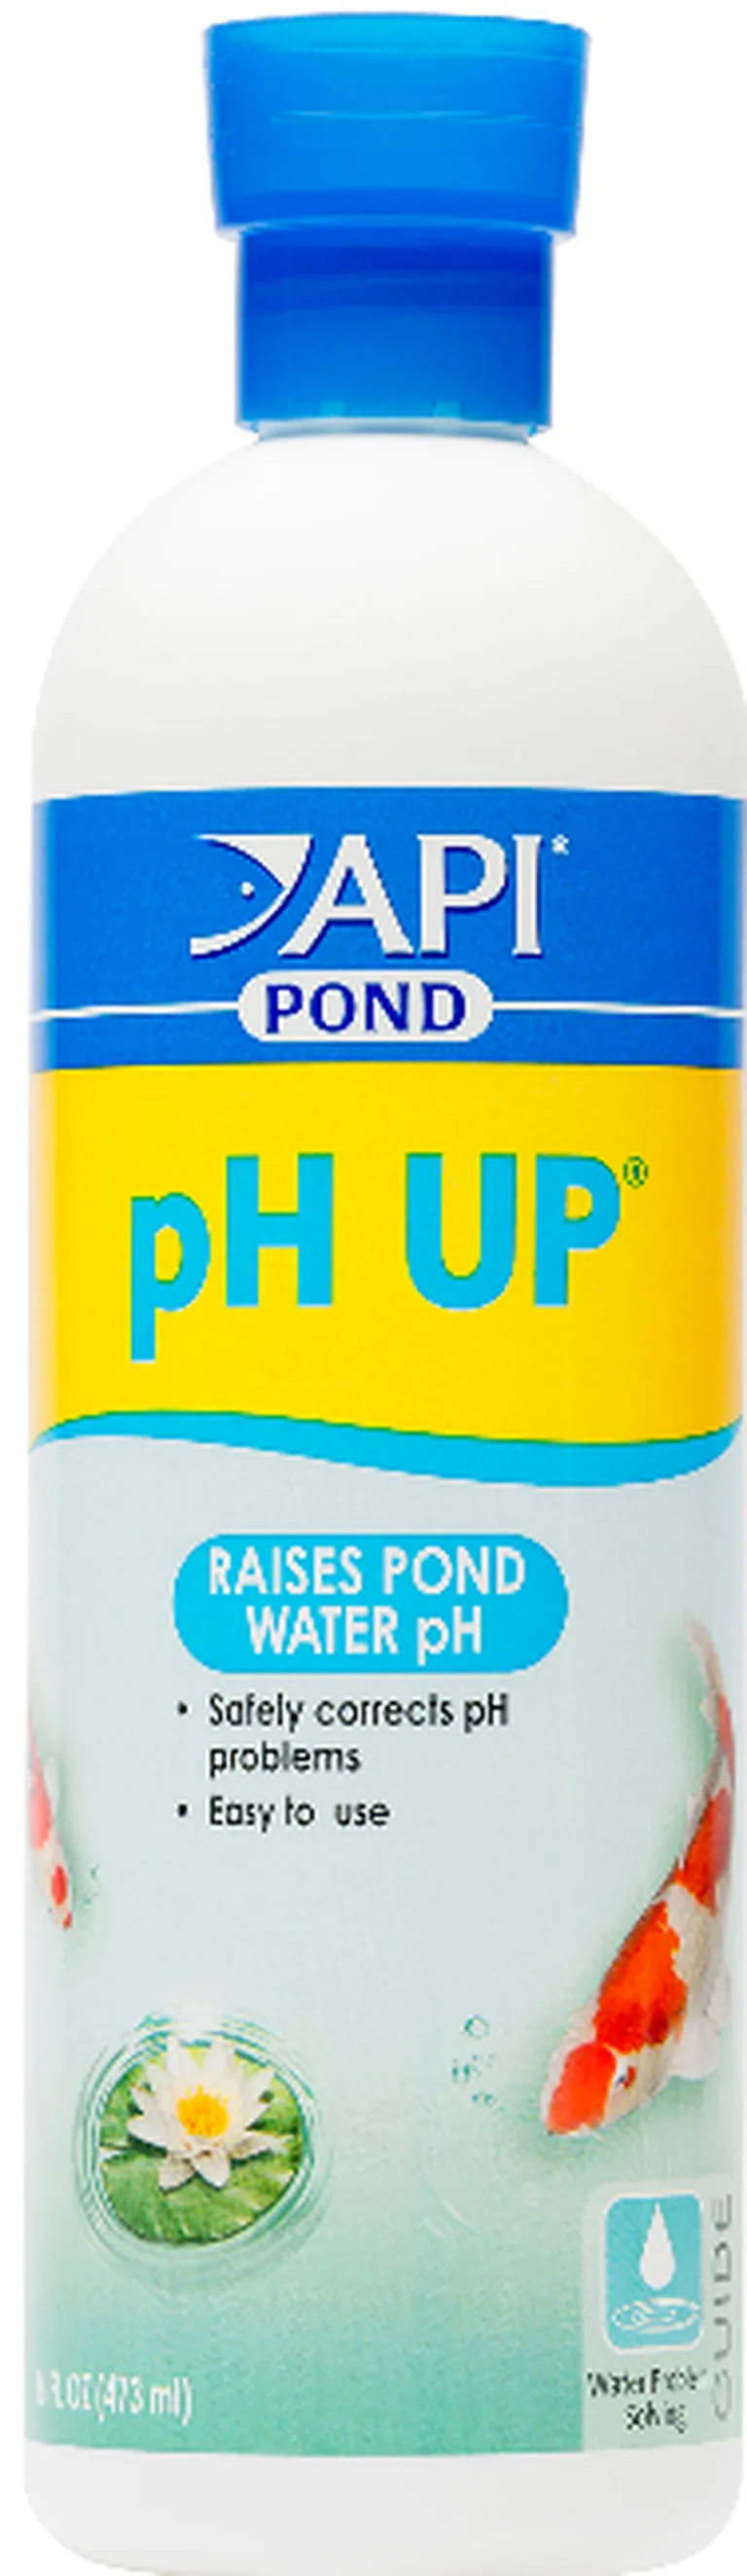 API Pond pH Up Raises Pond Water pH Photo 1